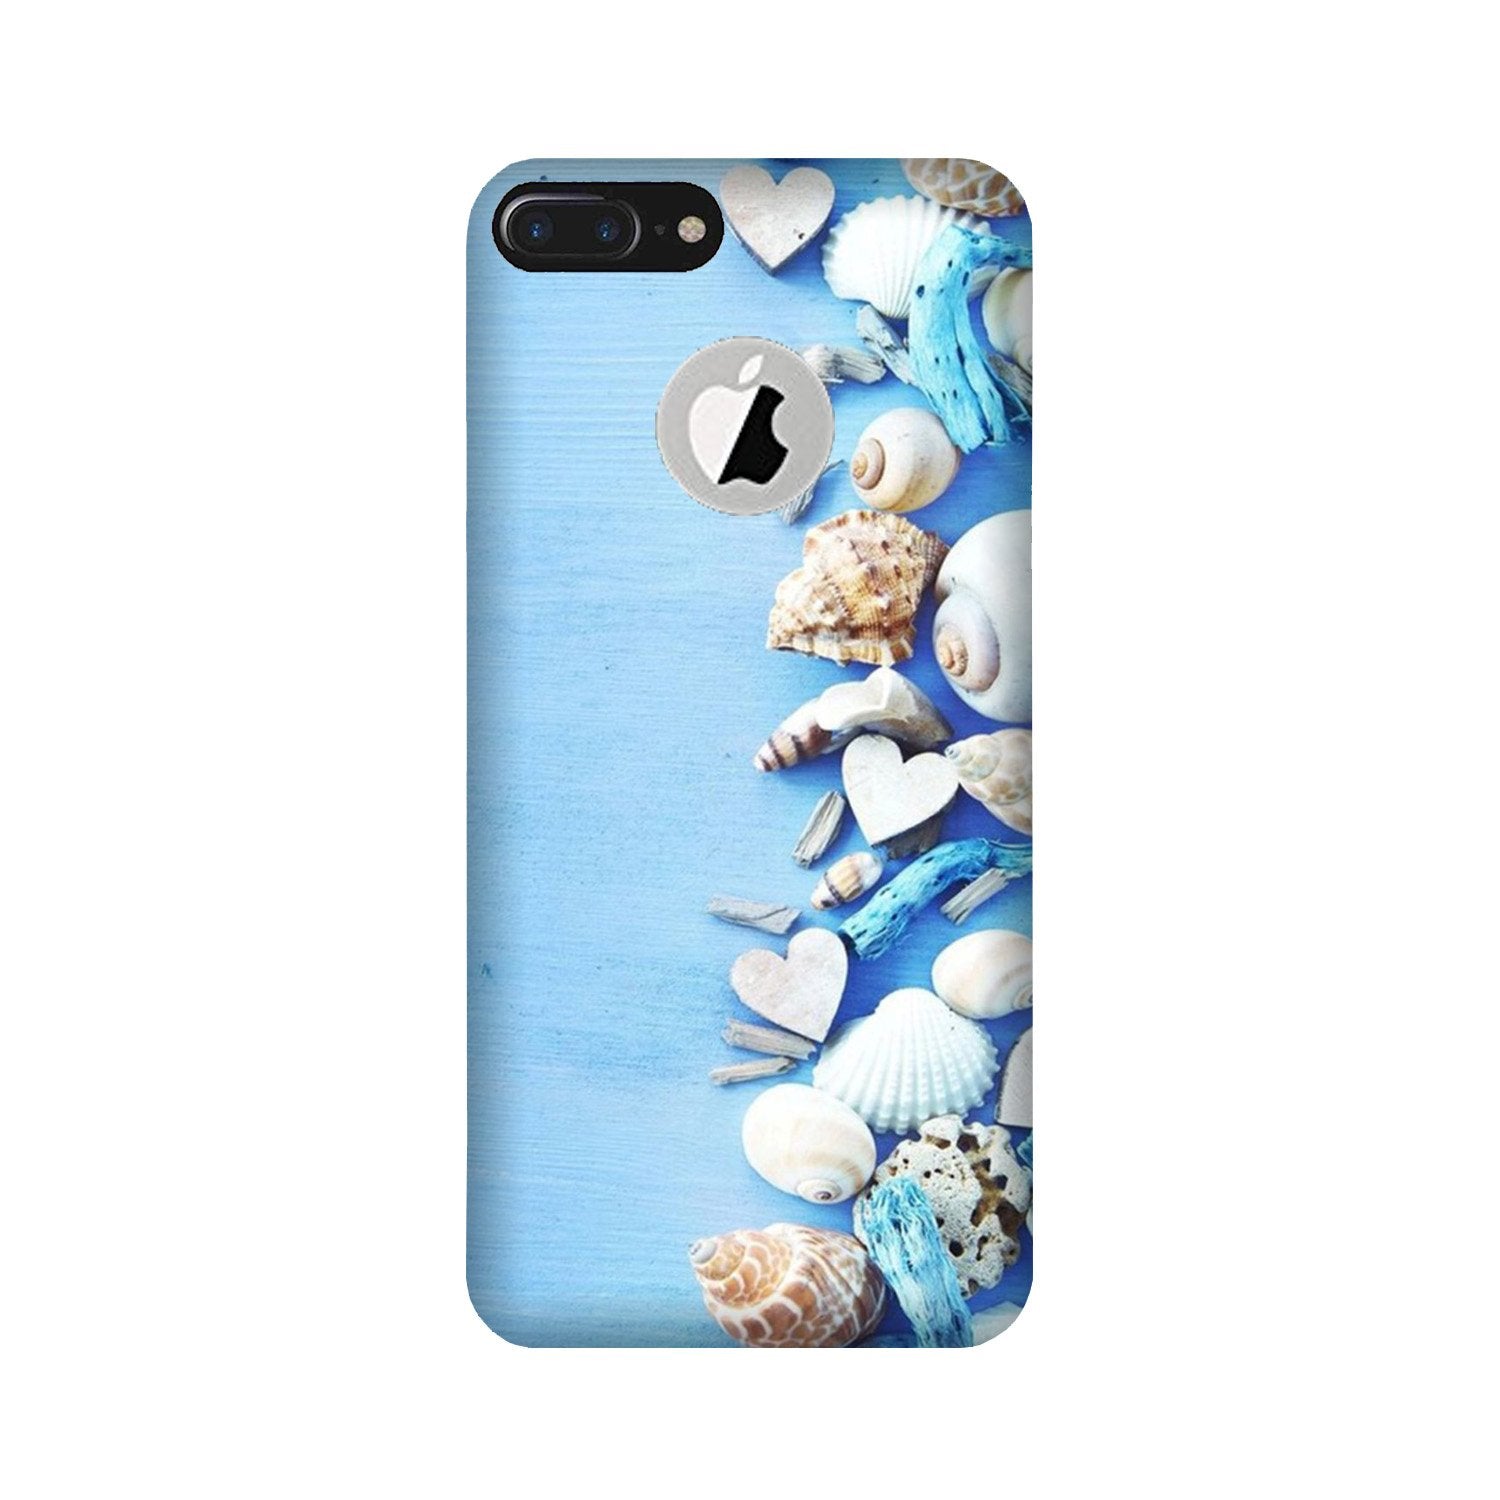 Sea Shells2 Case for iPhone 7 Plus logo cut